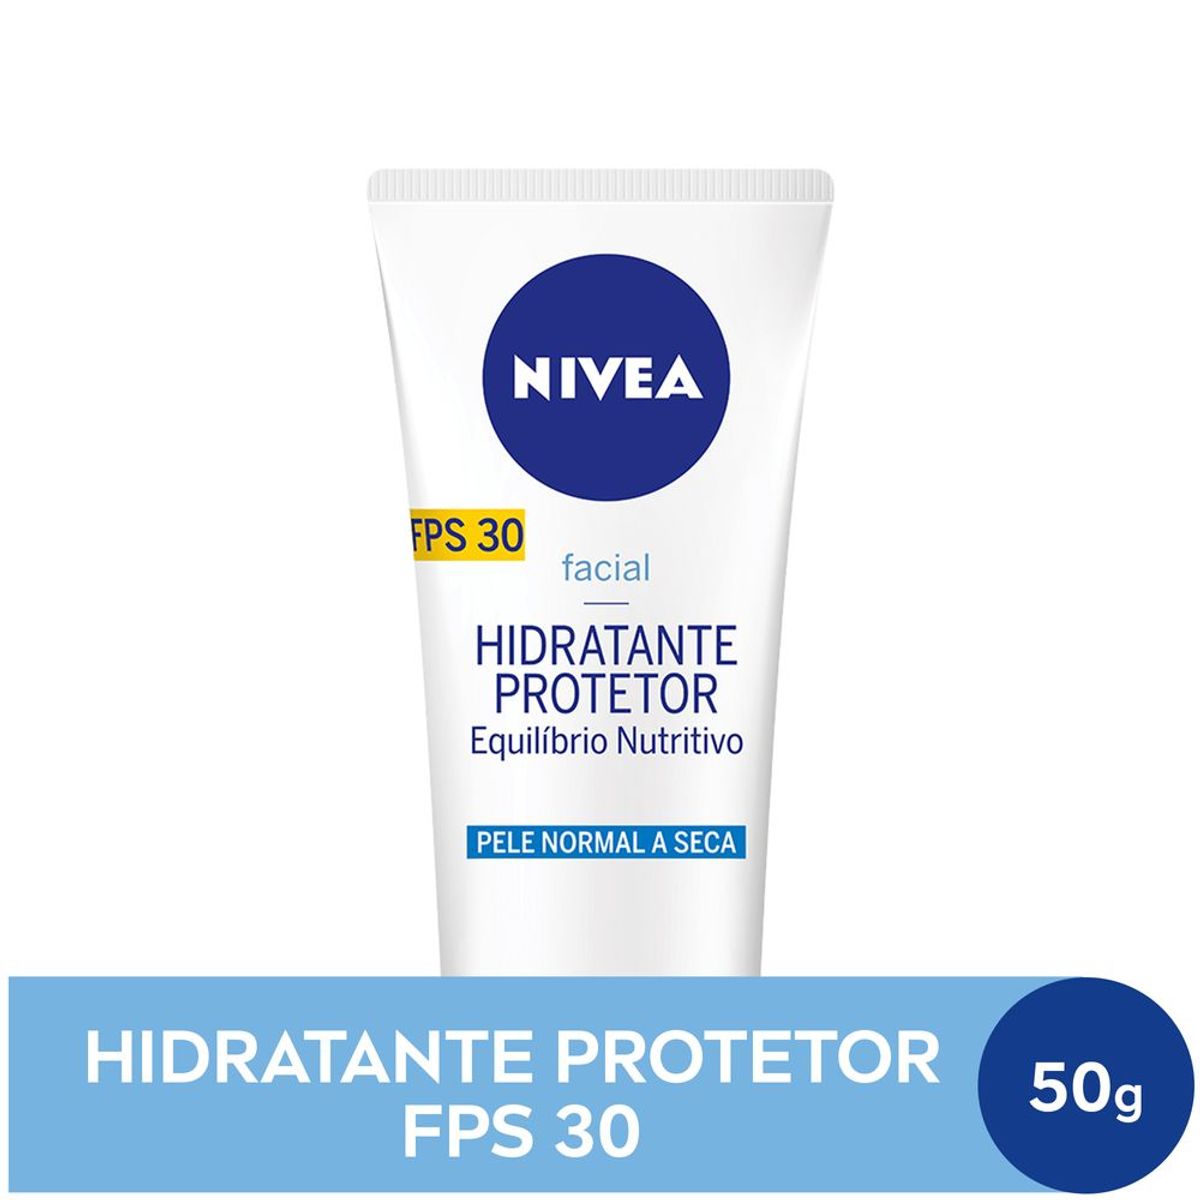 Nivea Hidratante Protetor Equilibrio Nutritivo FPS30 50g image number 1